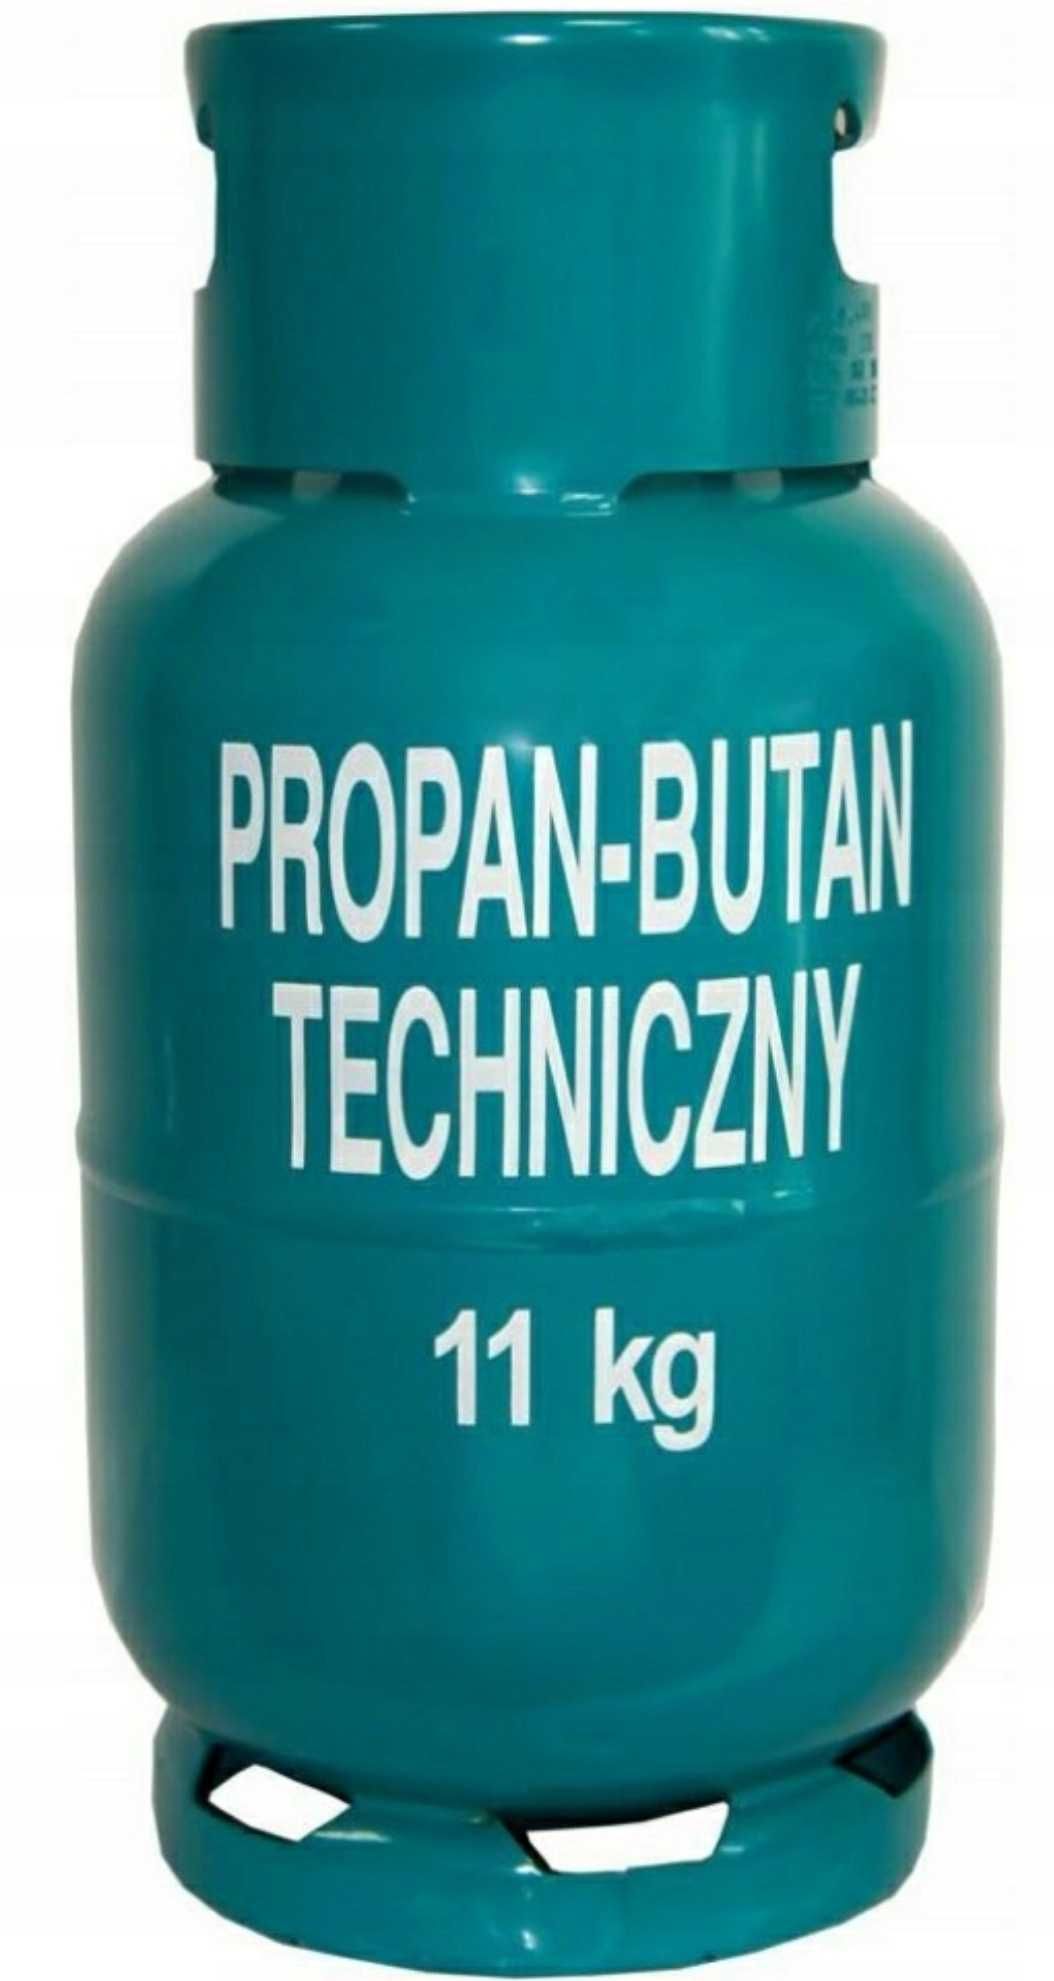 Gaz propan-butan w butli 11 kg